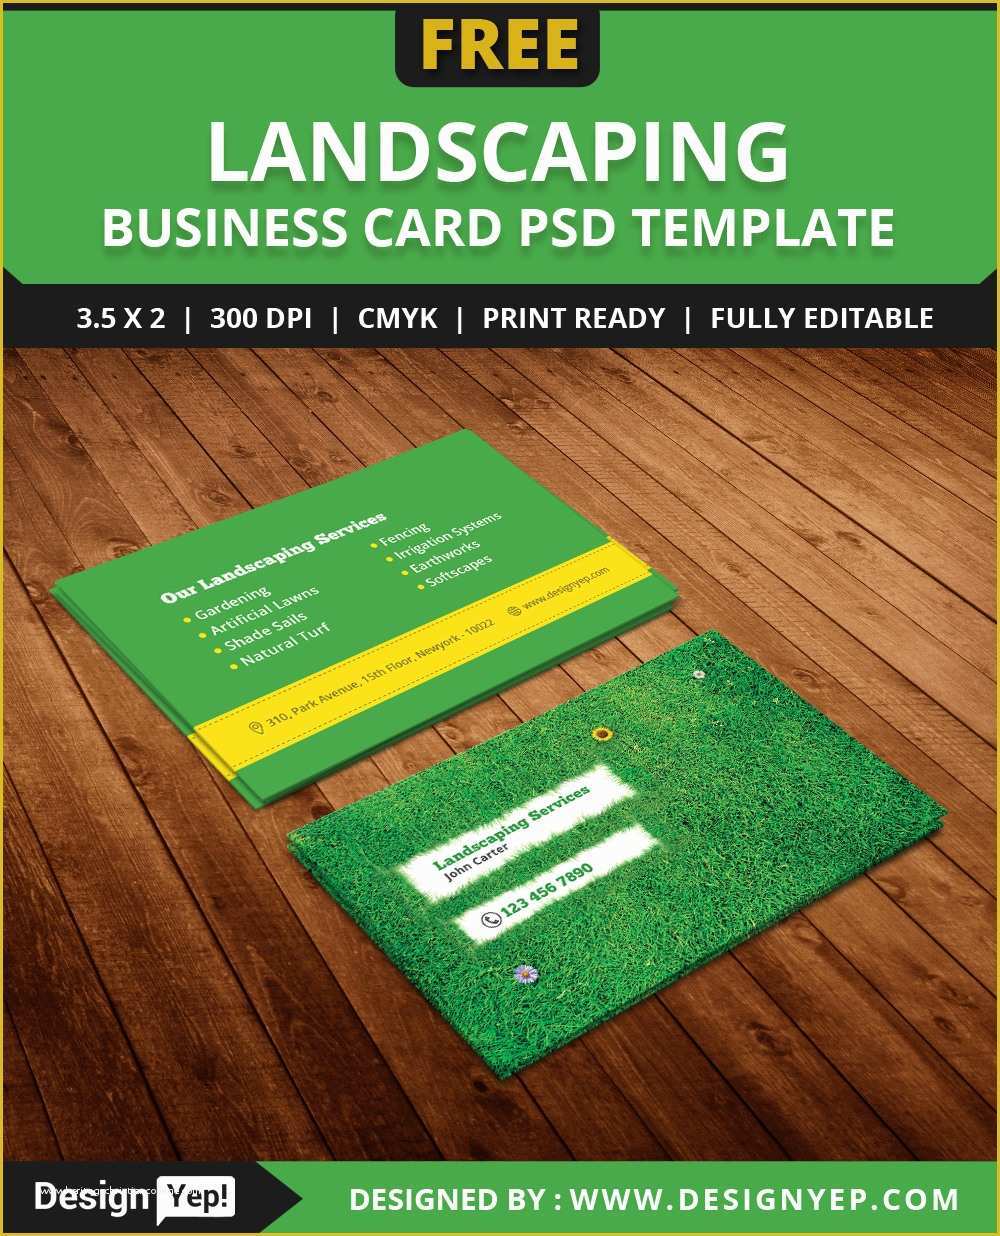 Lawn Care Business Card Templates Free Downloads Of Free Landscaping Business Card Template Psd Designyep